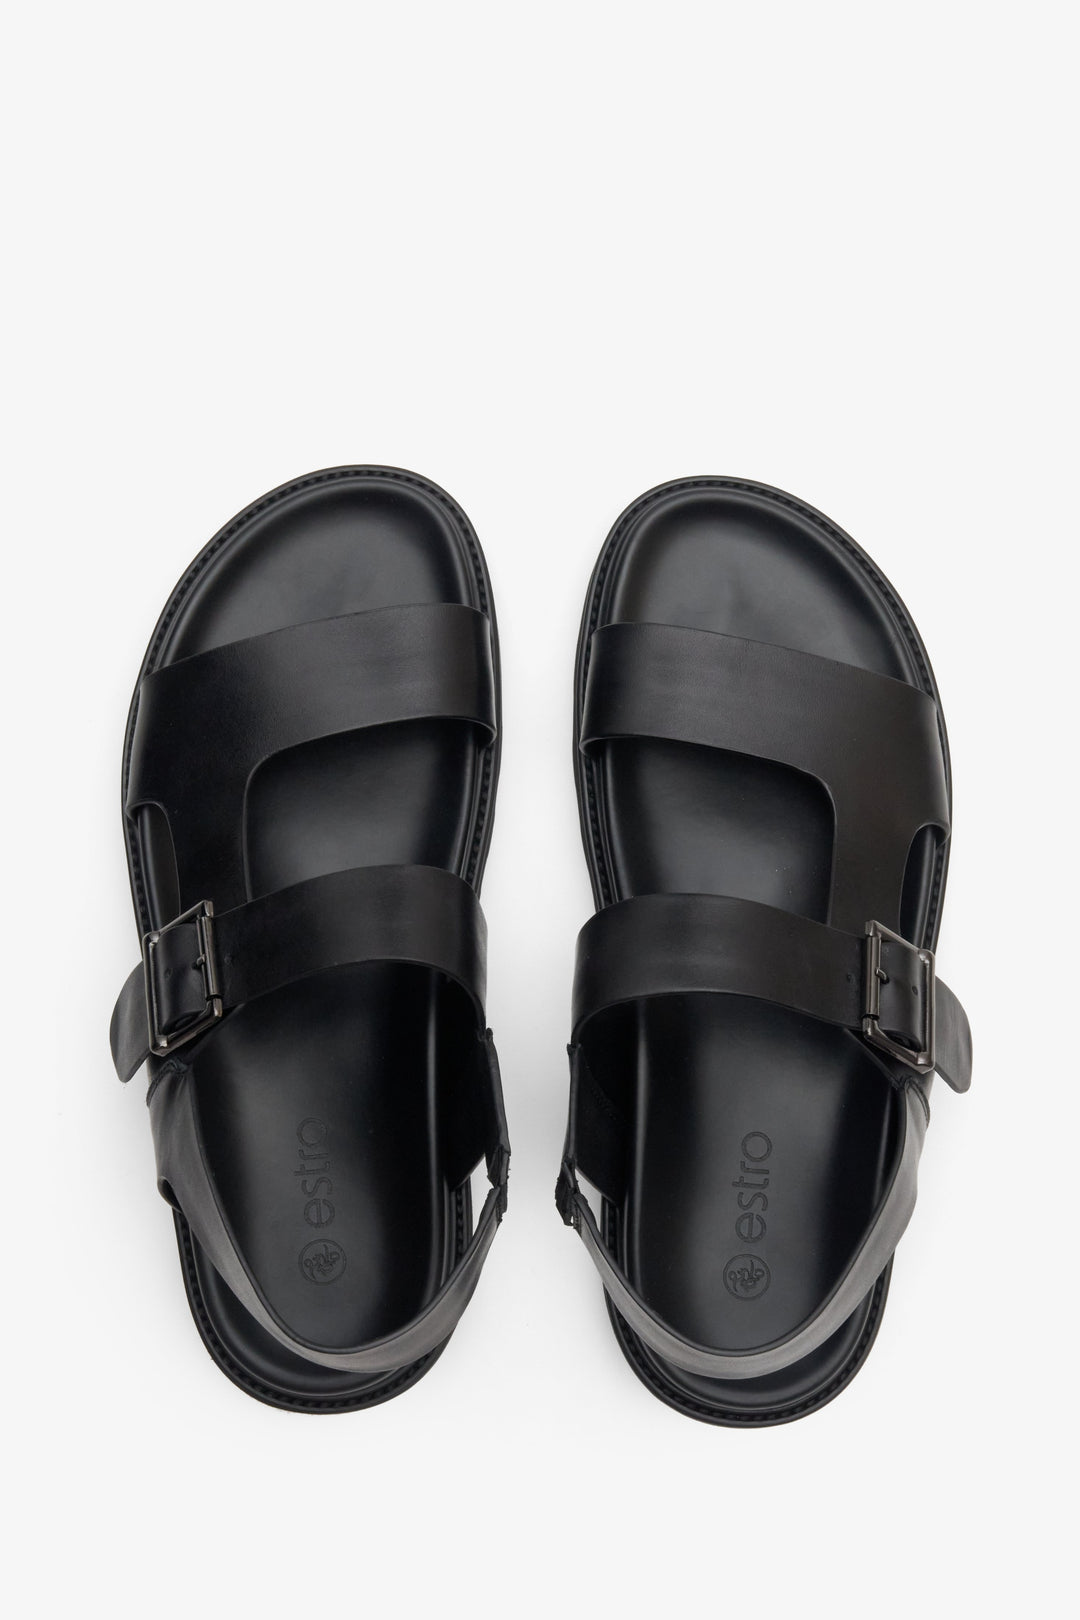 Men's genuine leather sandals made in black, Estro brand - presentation form above.